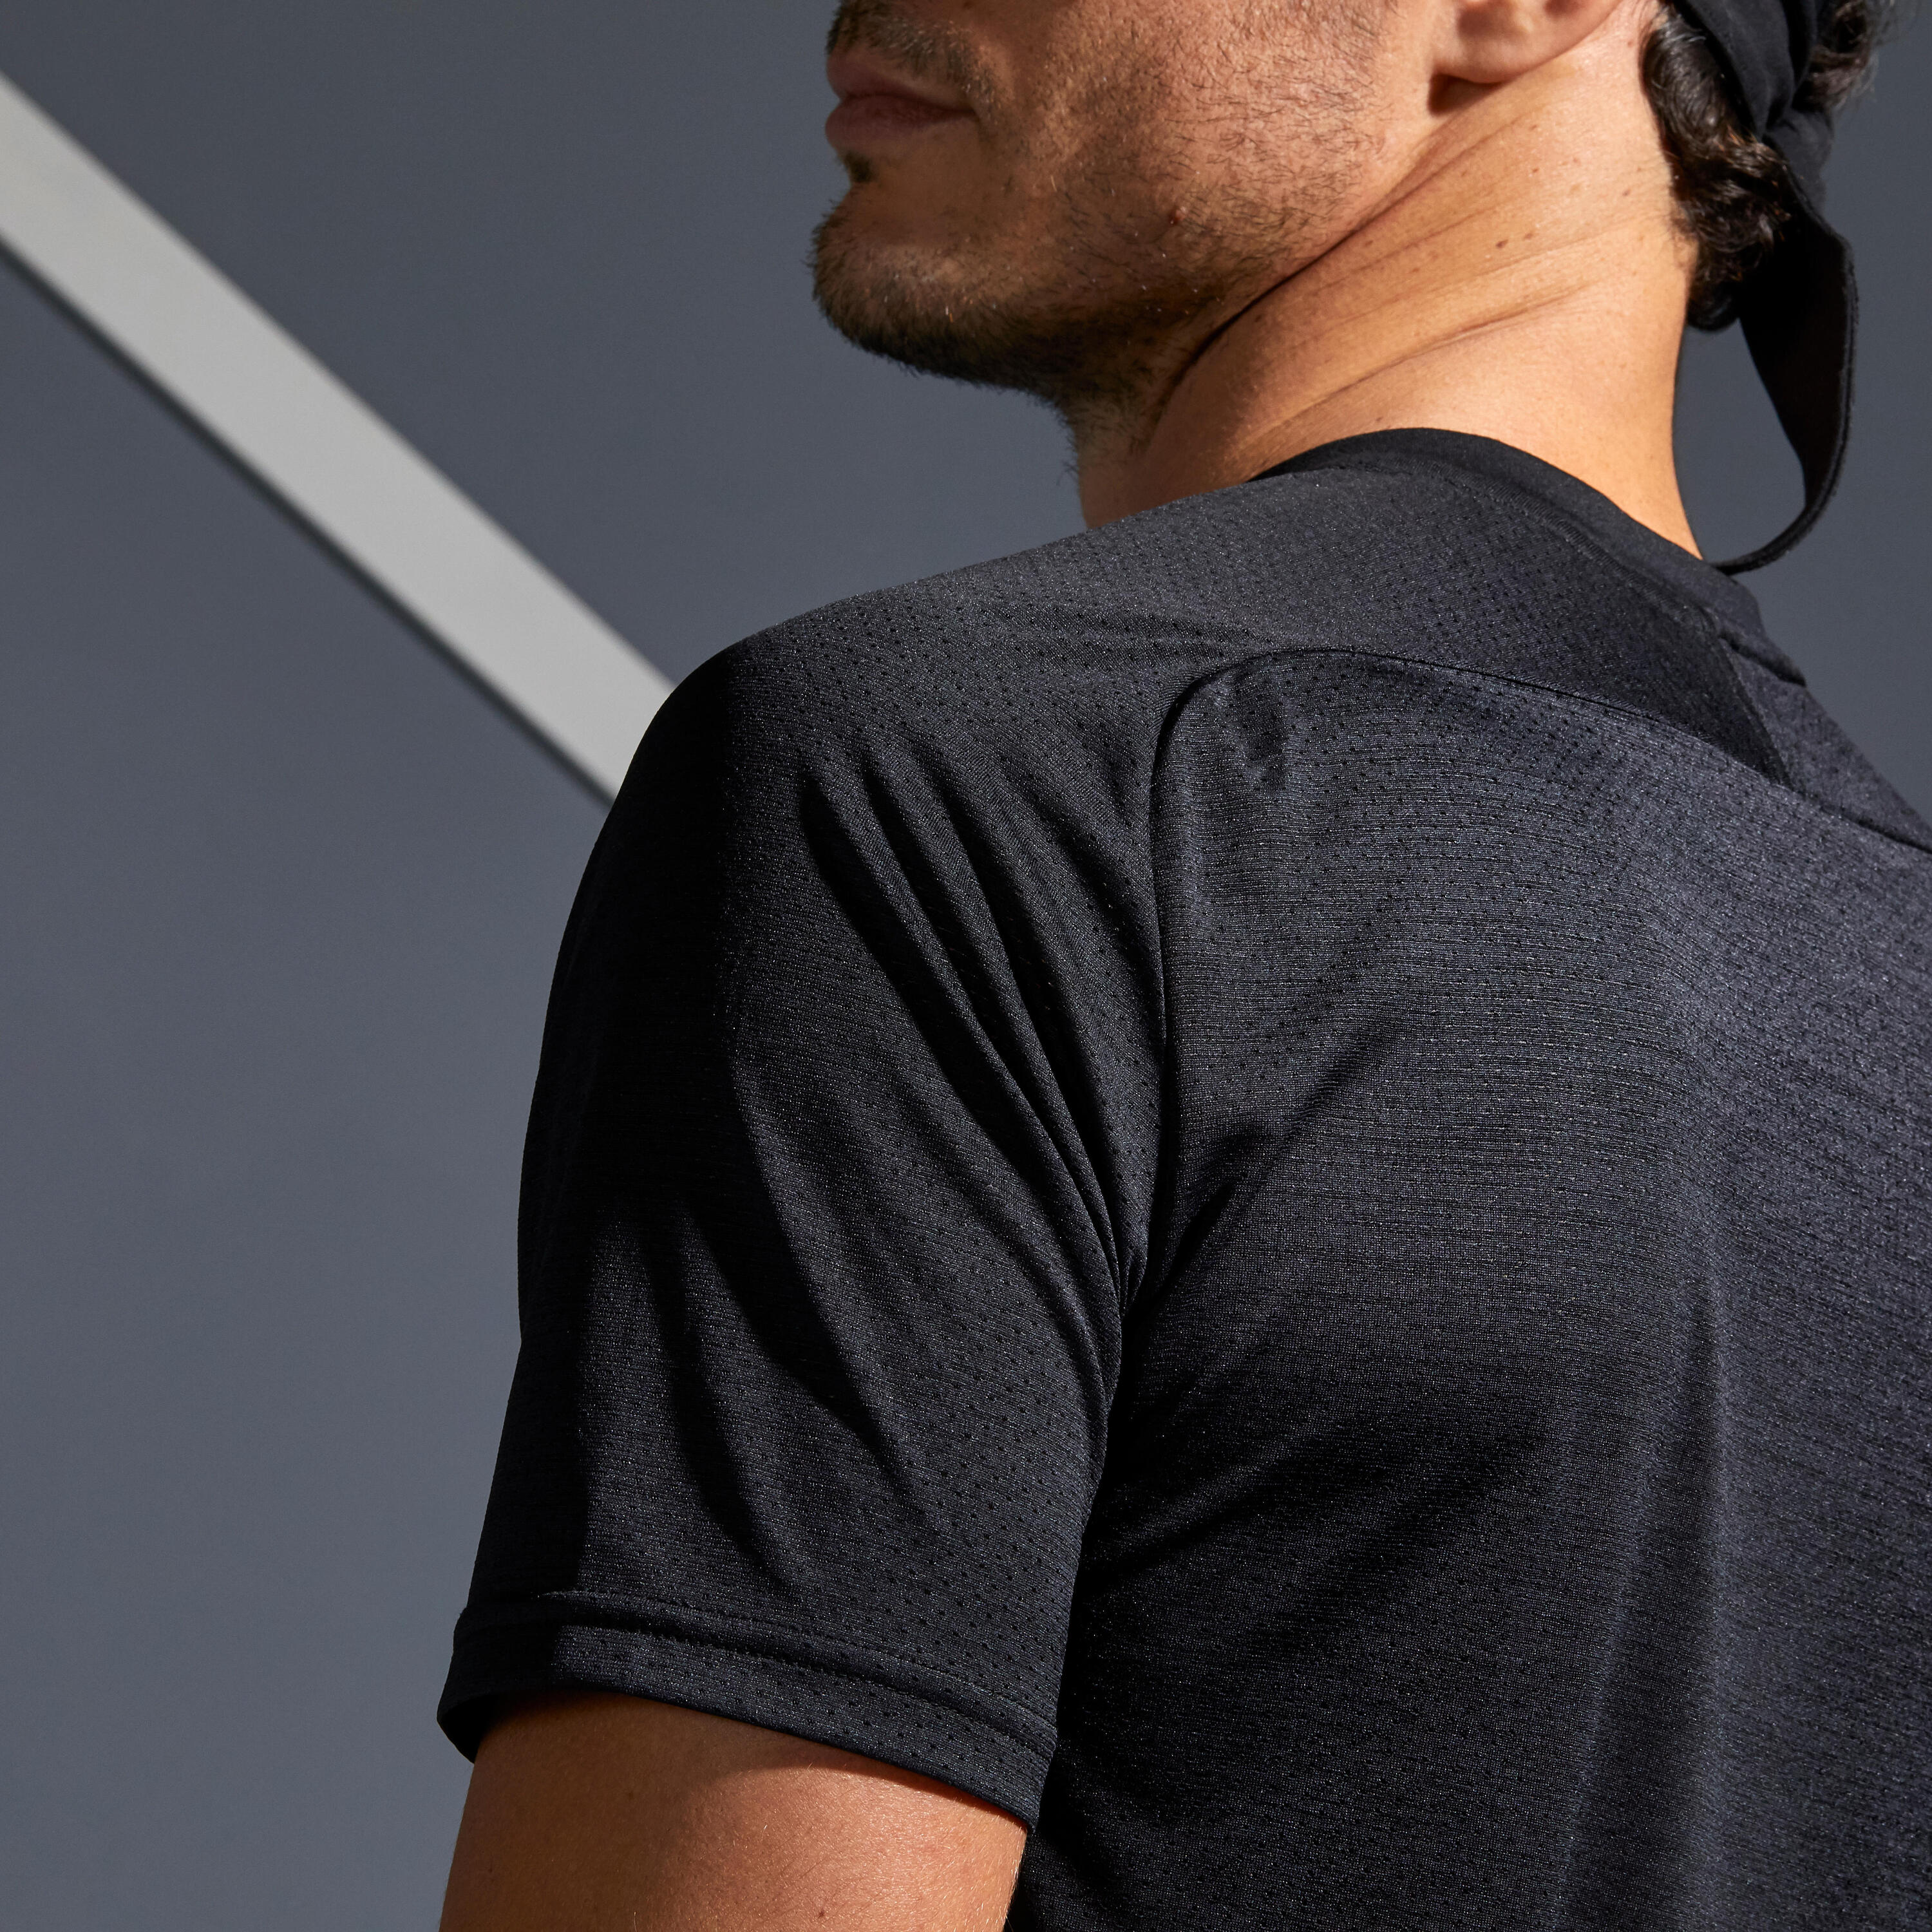 Men's Short-Sleeved Tennis T-Shirt TTS 500 Dry - Black/Grey 9/10